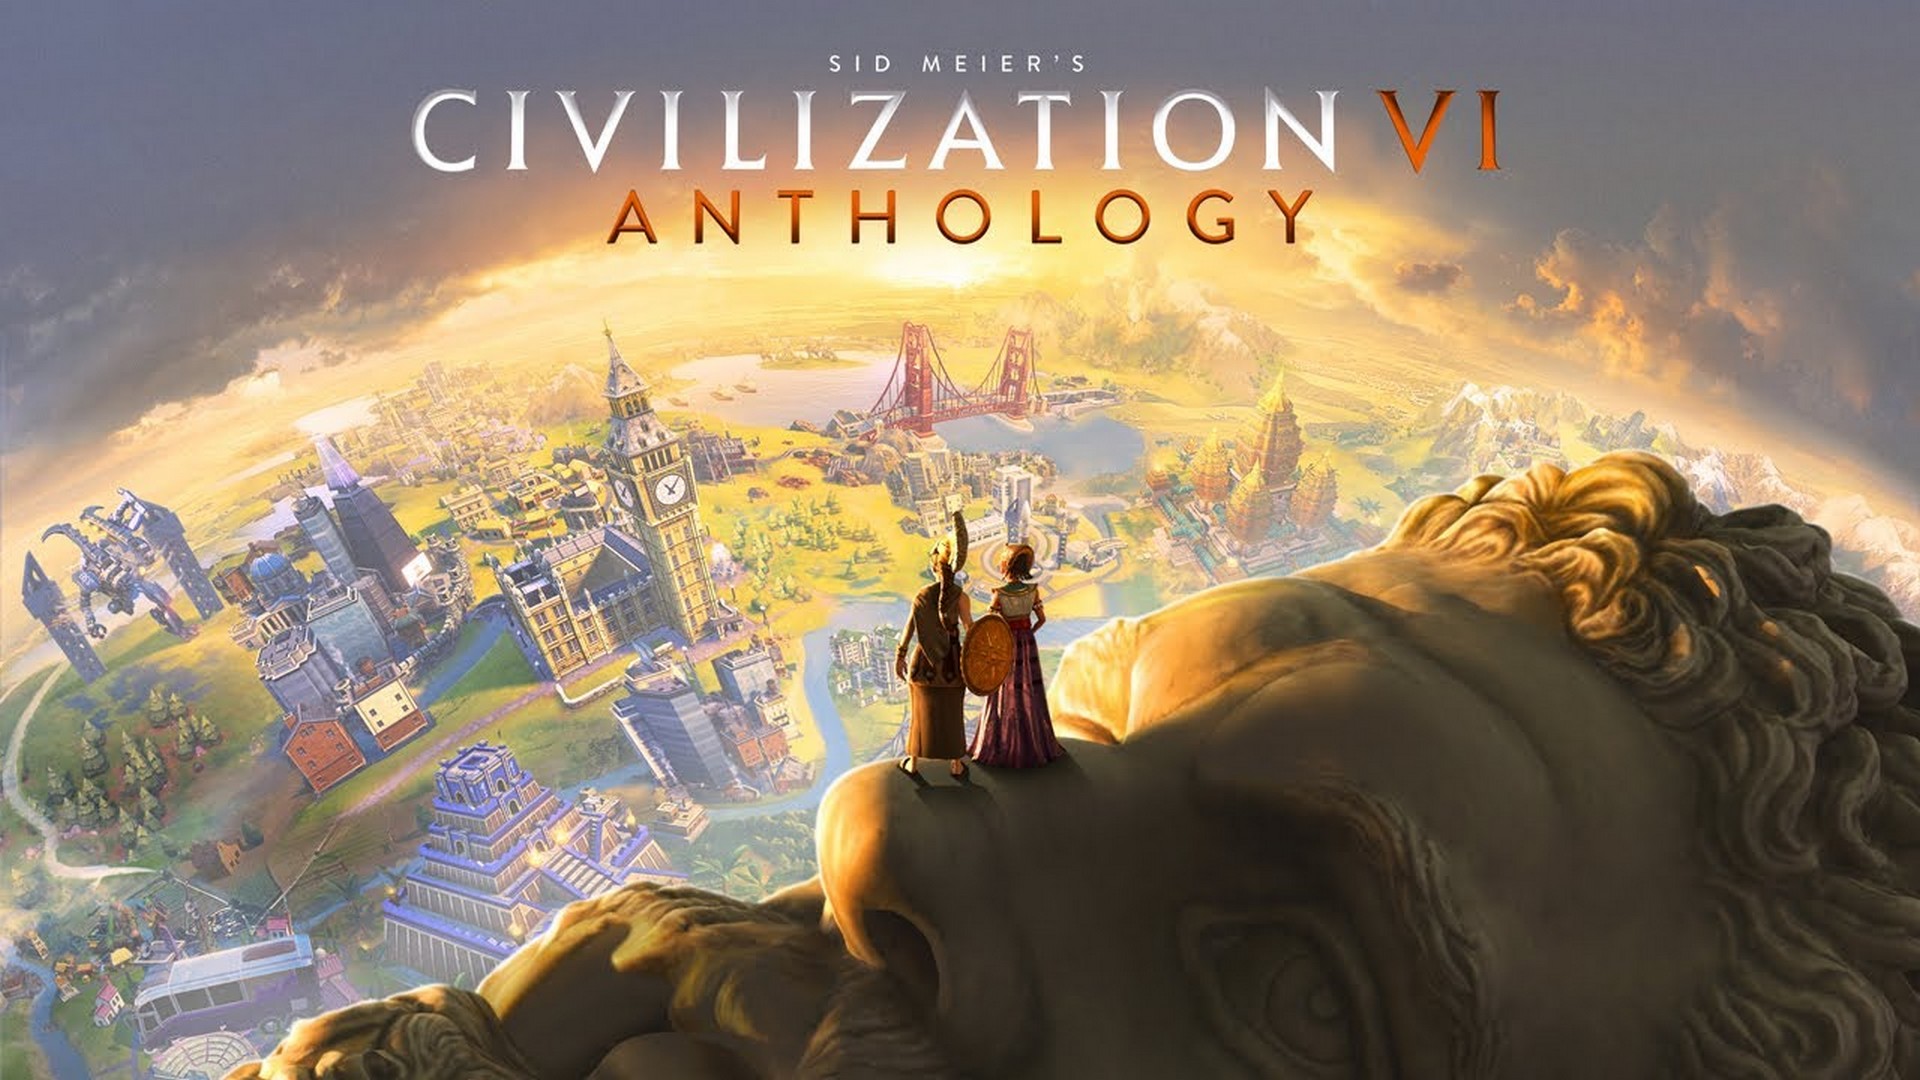 Sid Meier’s Civilization VI Anthology Available Now on Windows PC